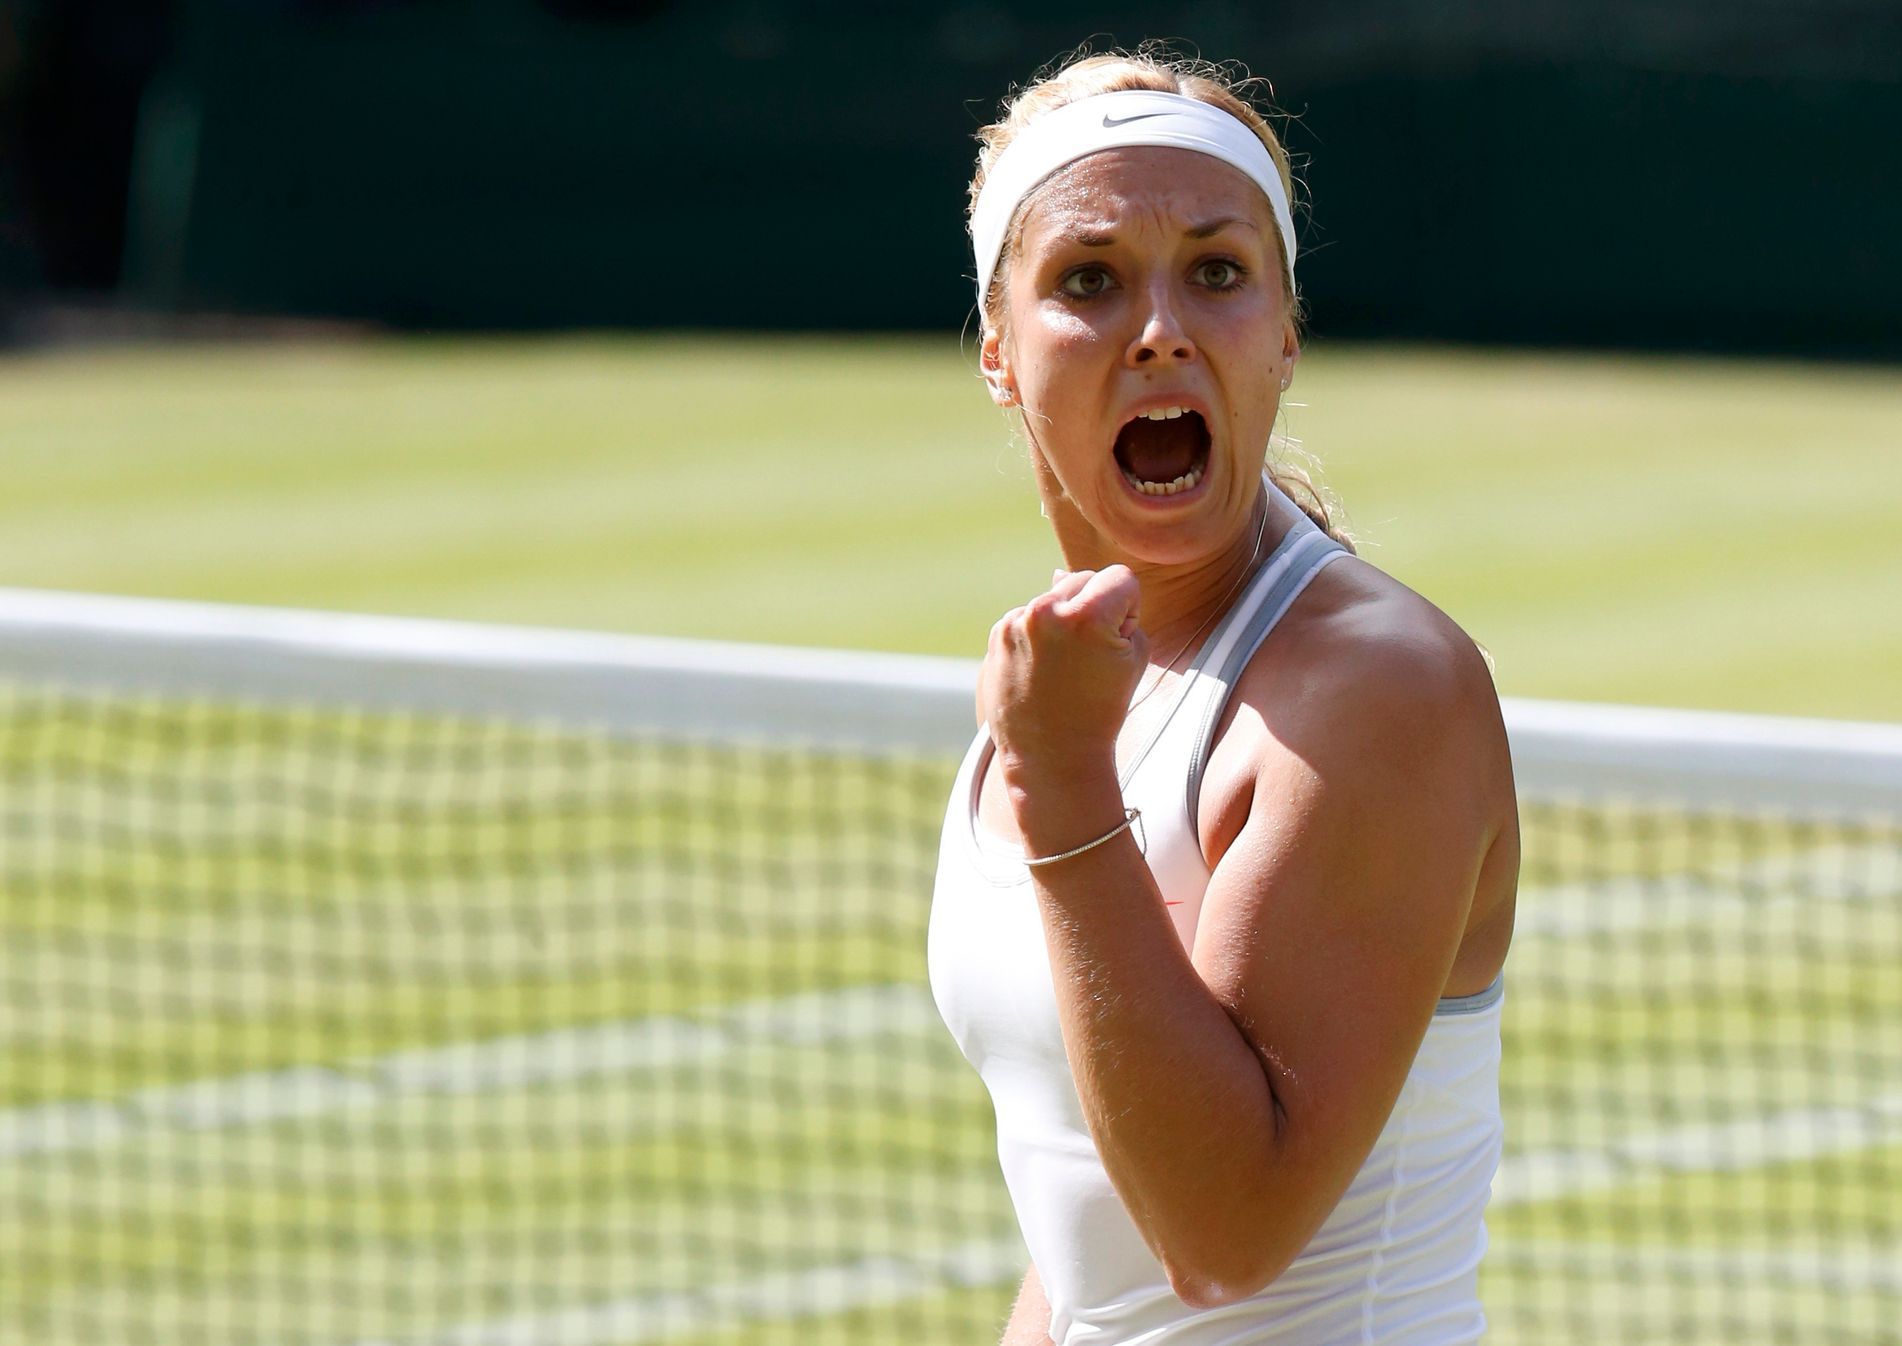 Tenis, Wimbledon, 2013: Sabine Lisická